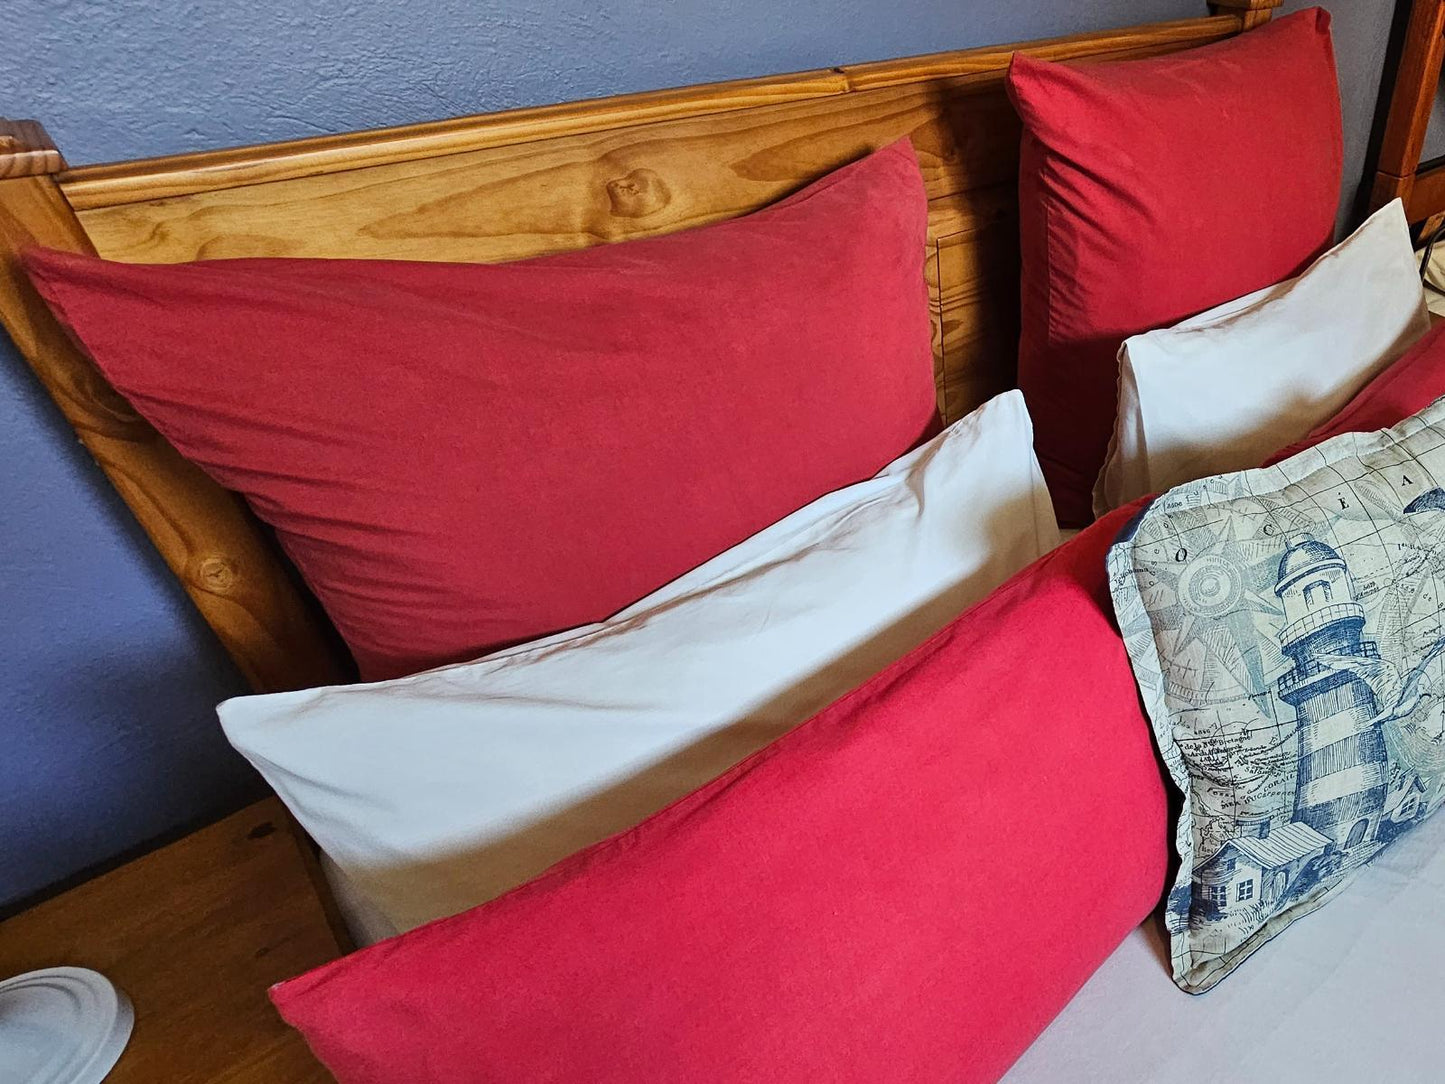 Three Bedroom Apartment- Sleeping 8 pax @ Old Vic Traveller's Inn